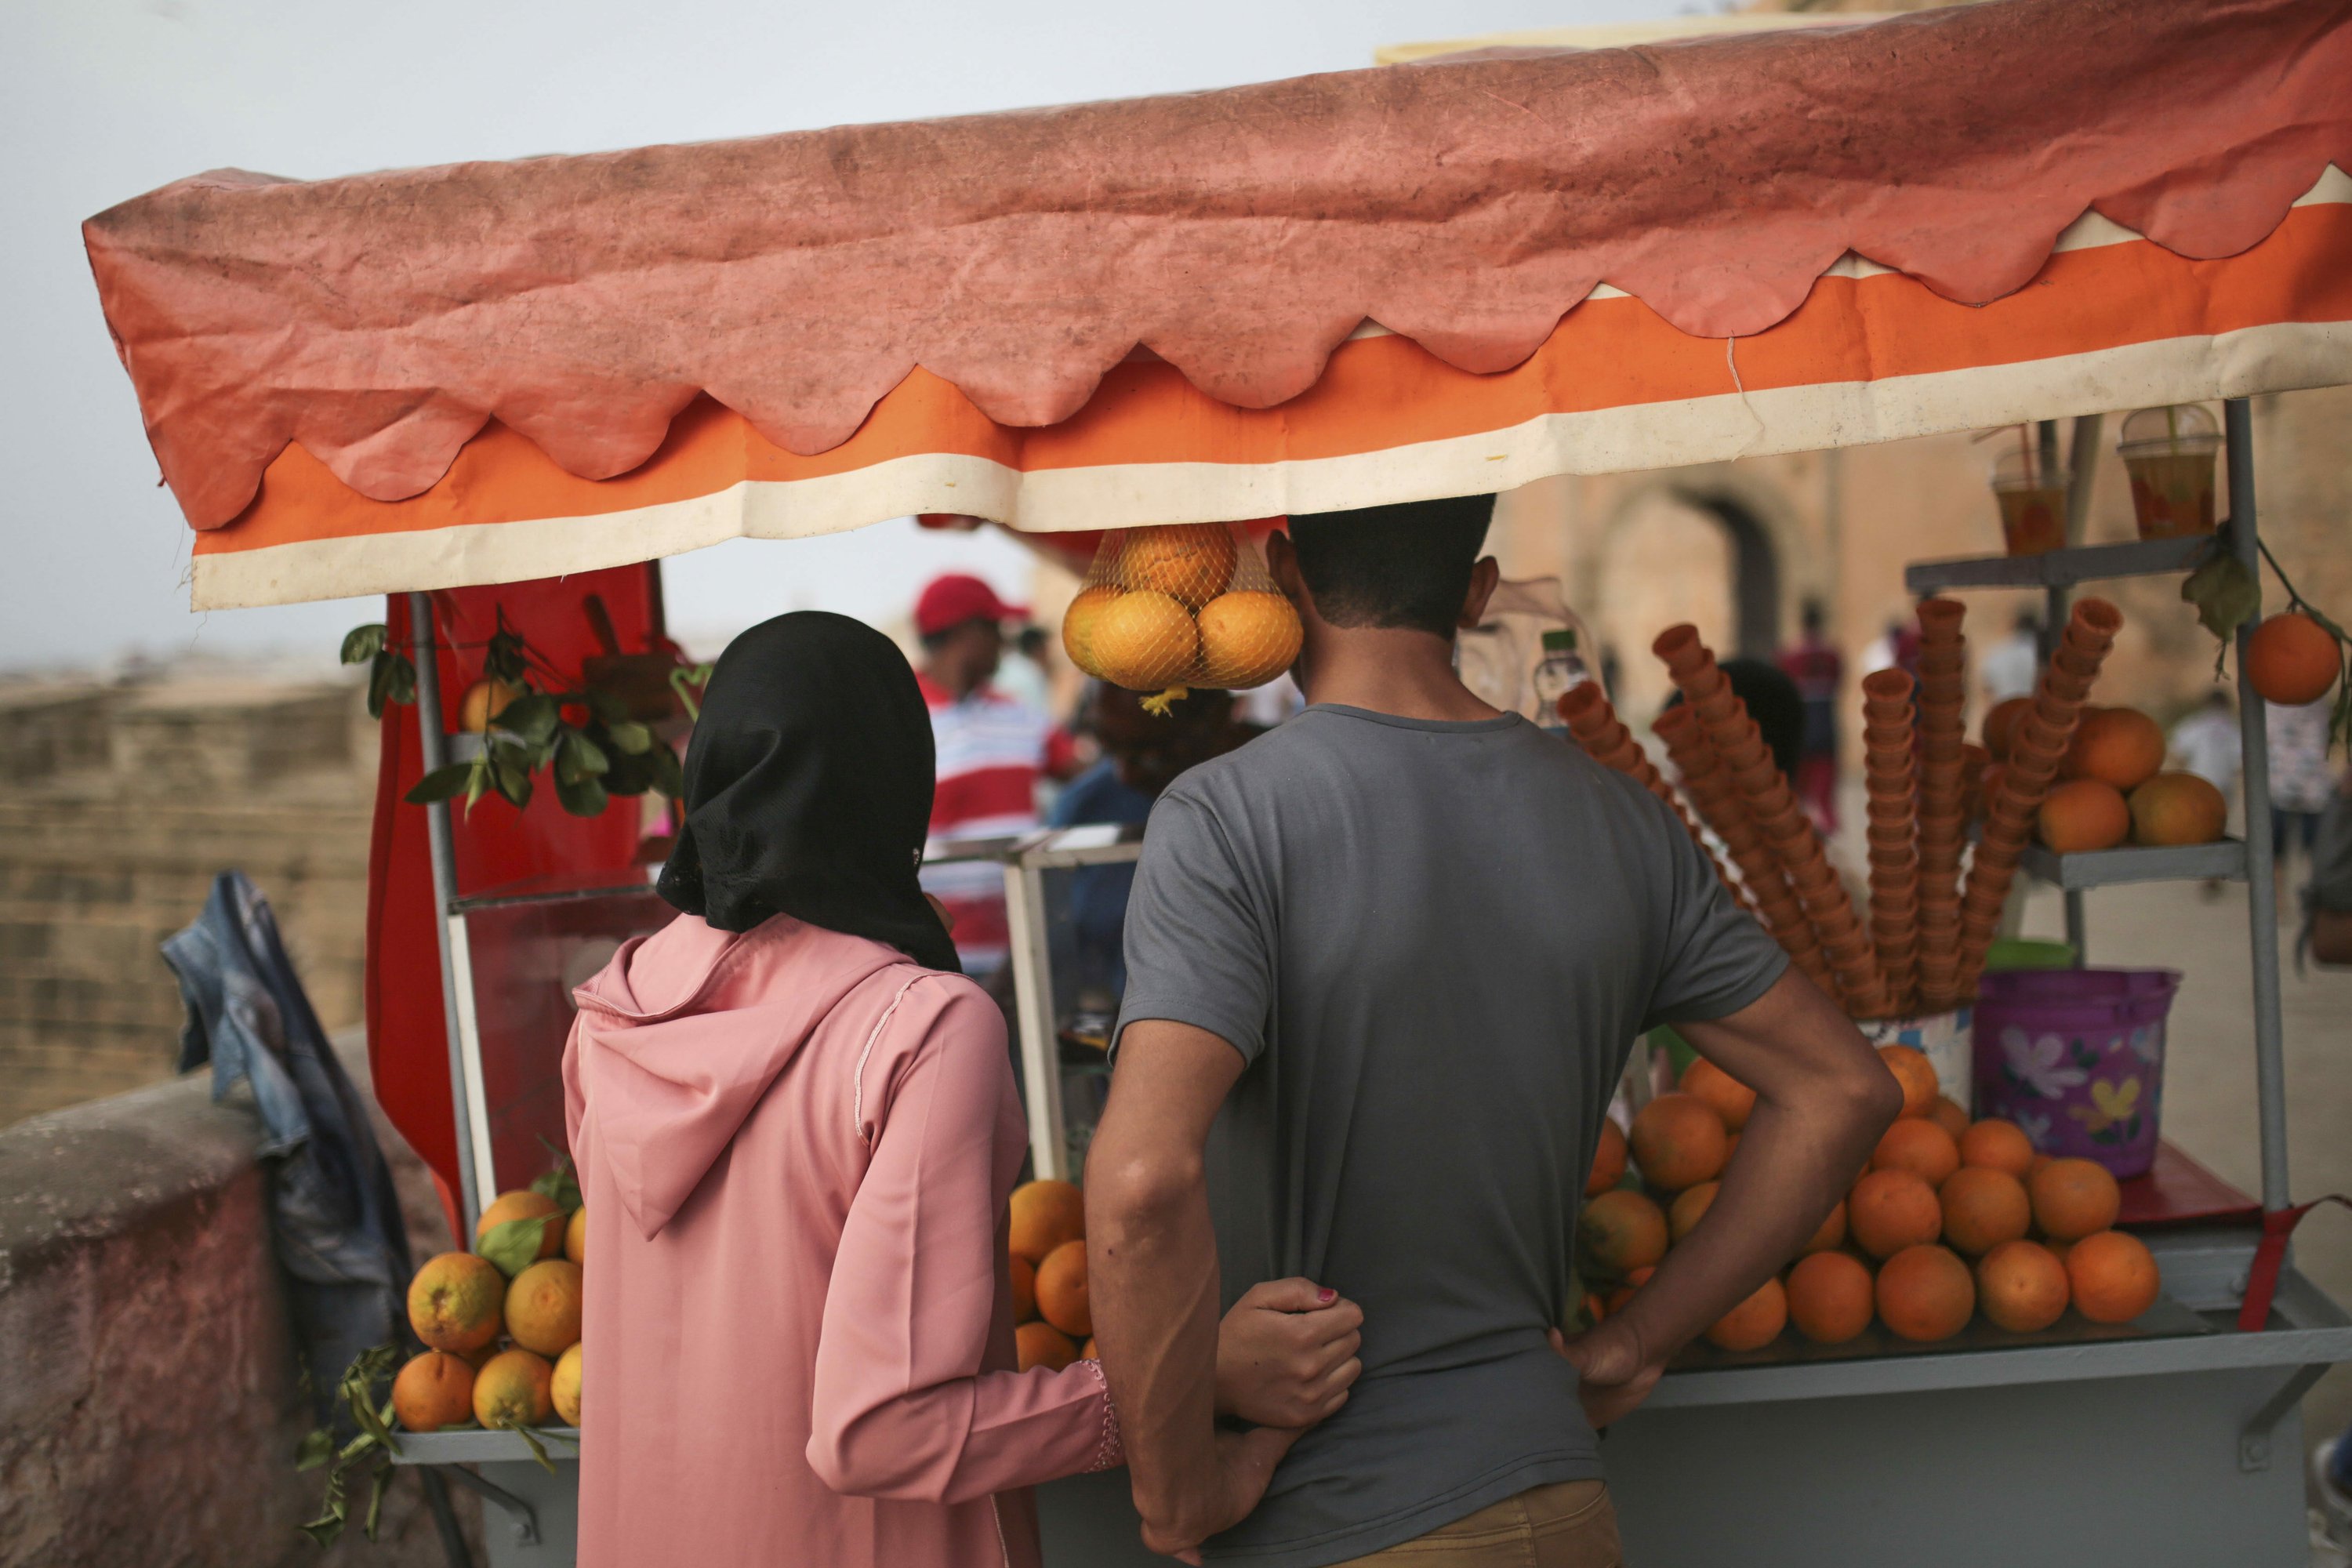 Morocco women struggle against marital violence, stereotypes | AP News